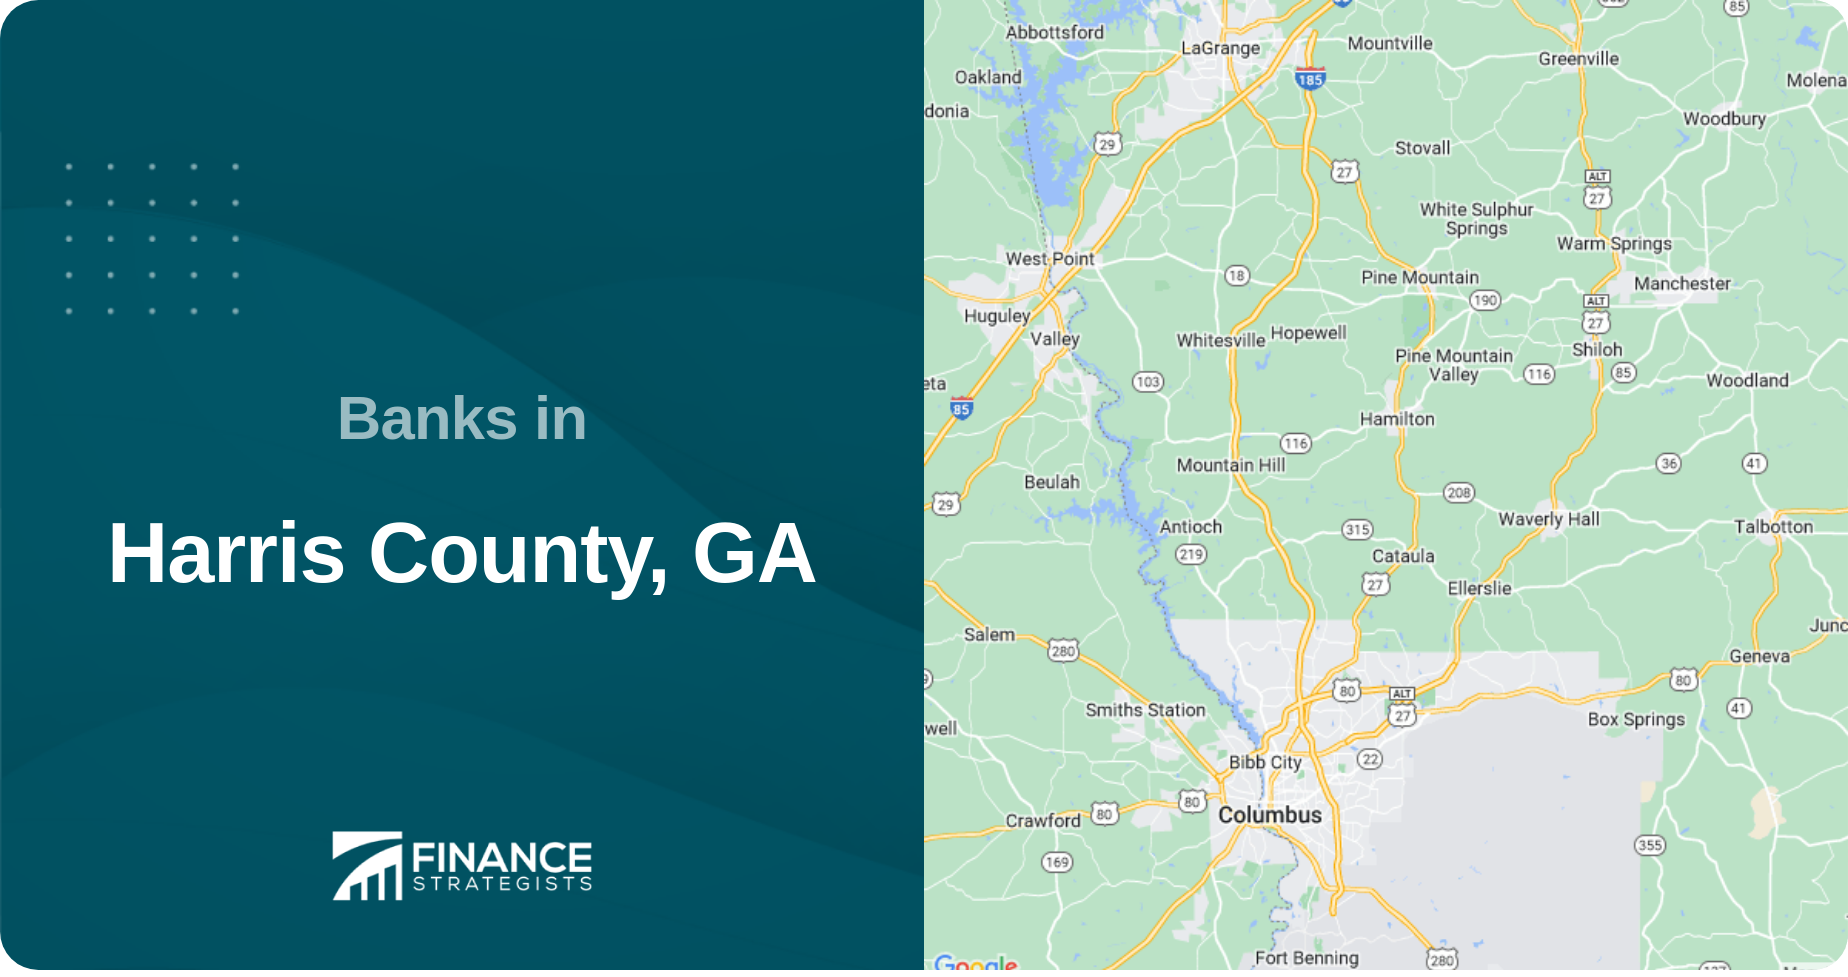 Banks in Harris County, GA